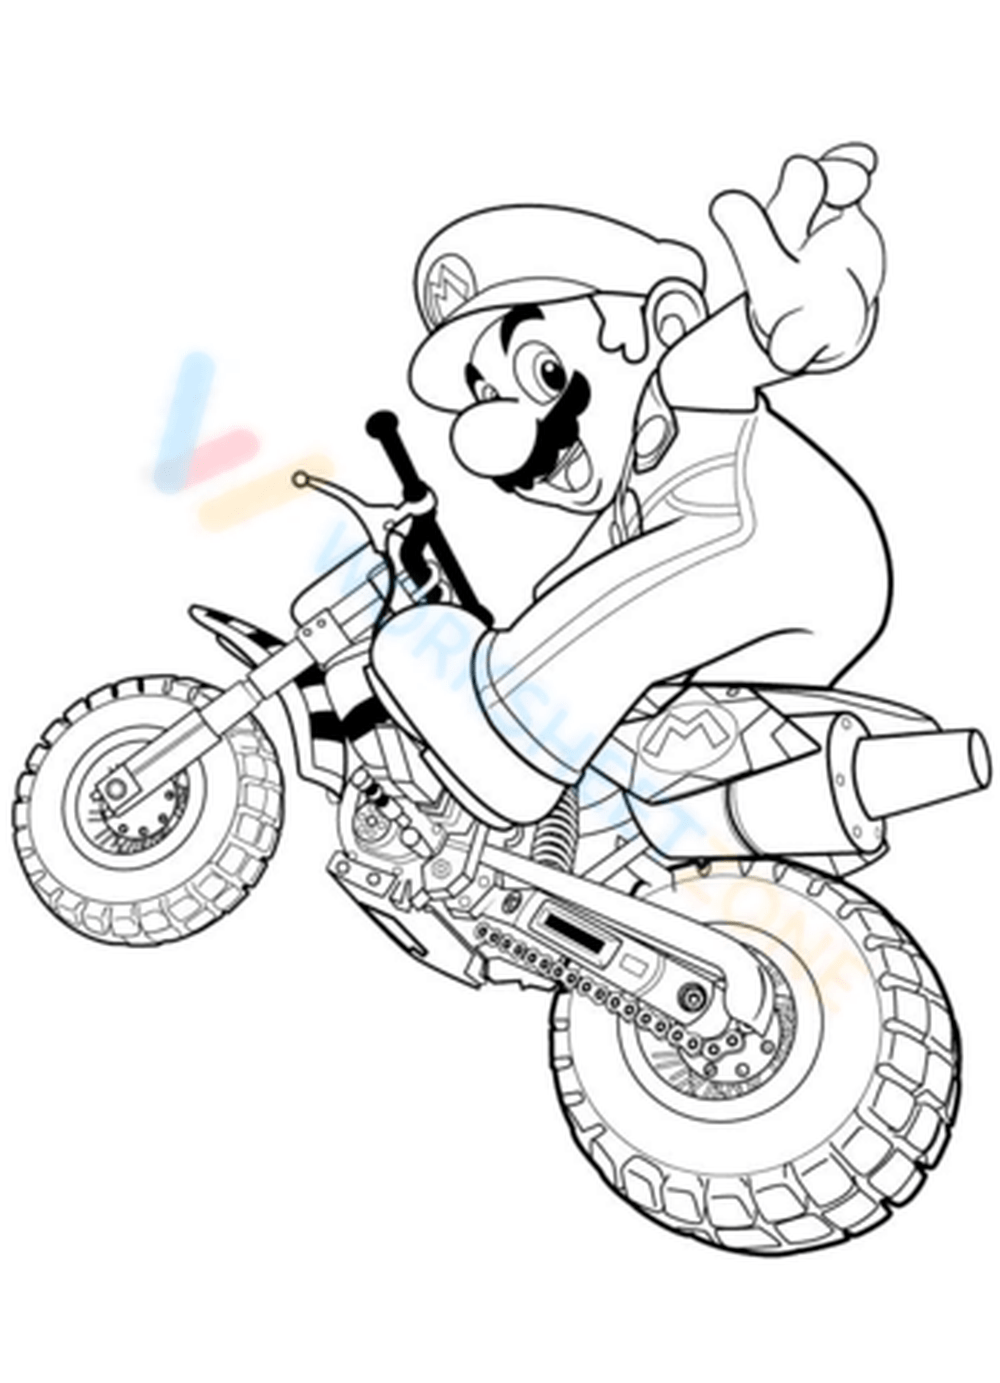 Mario rides a motorbike